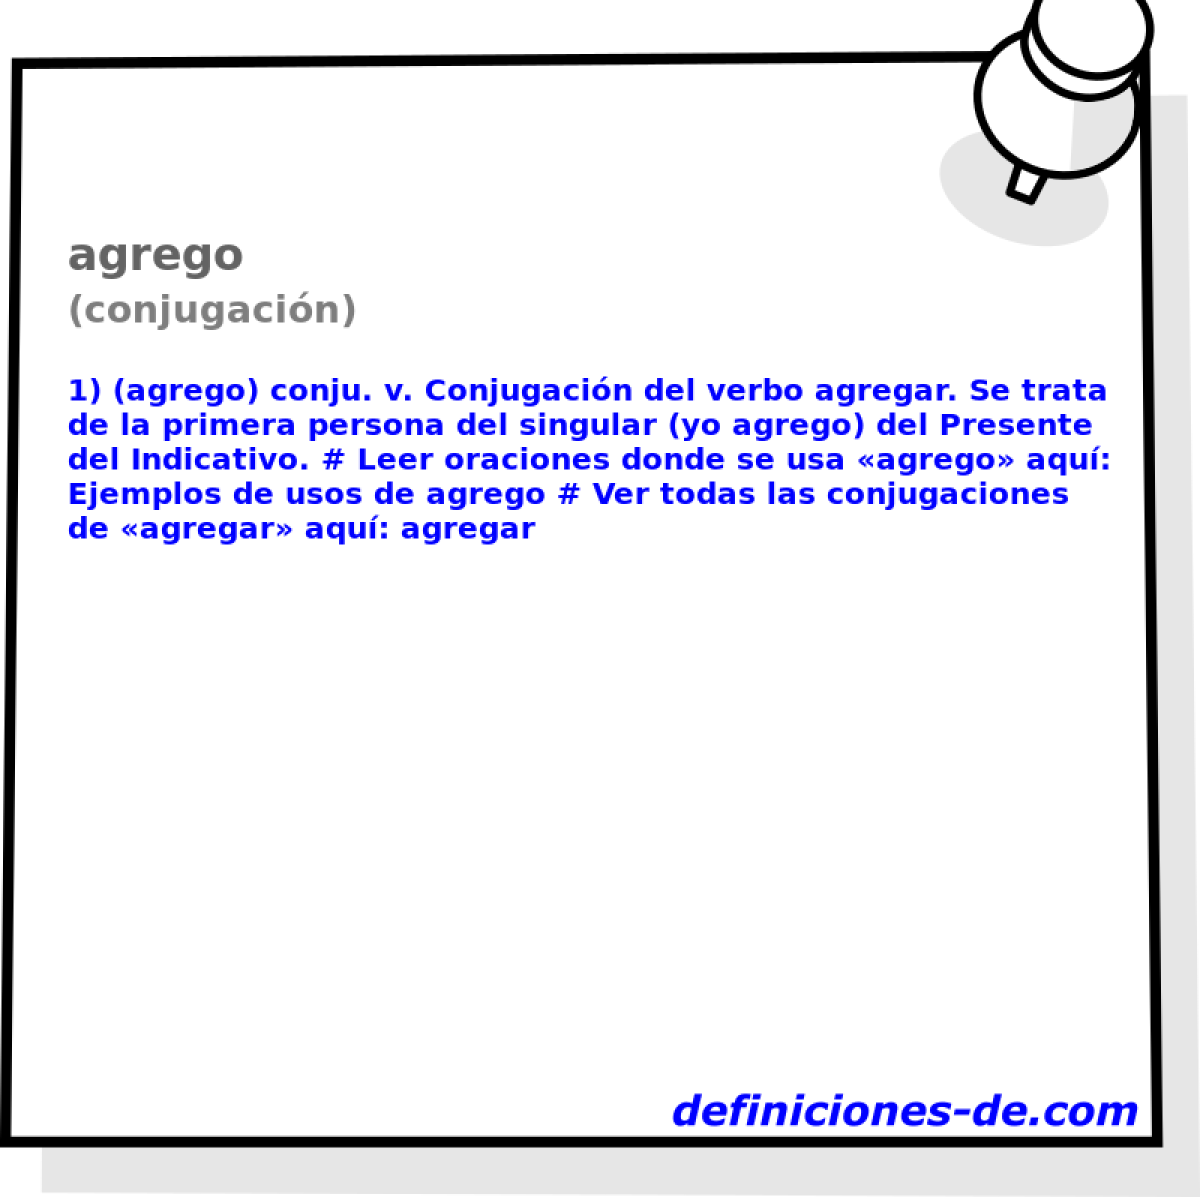 agrego (conjugacin)